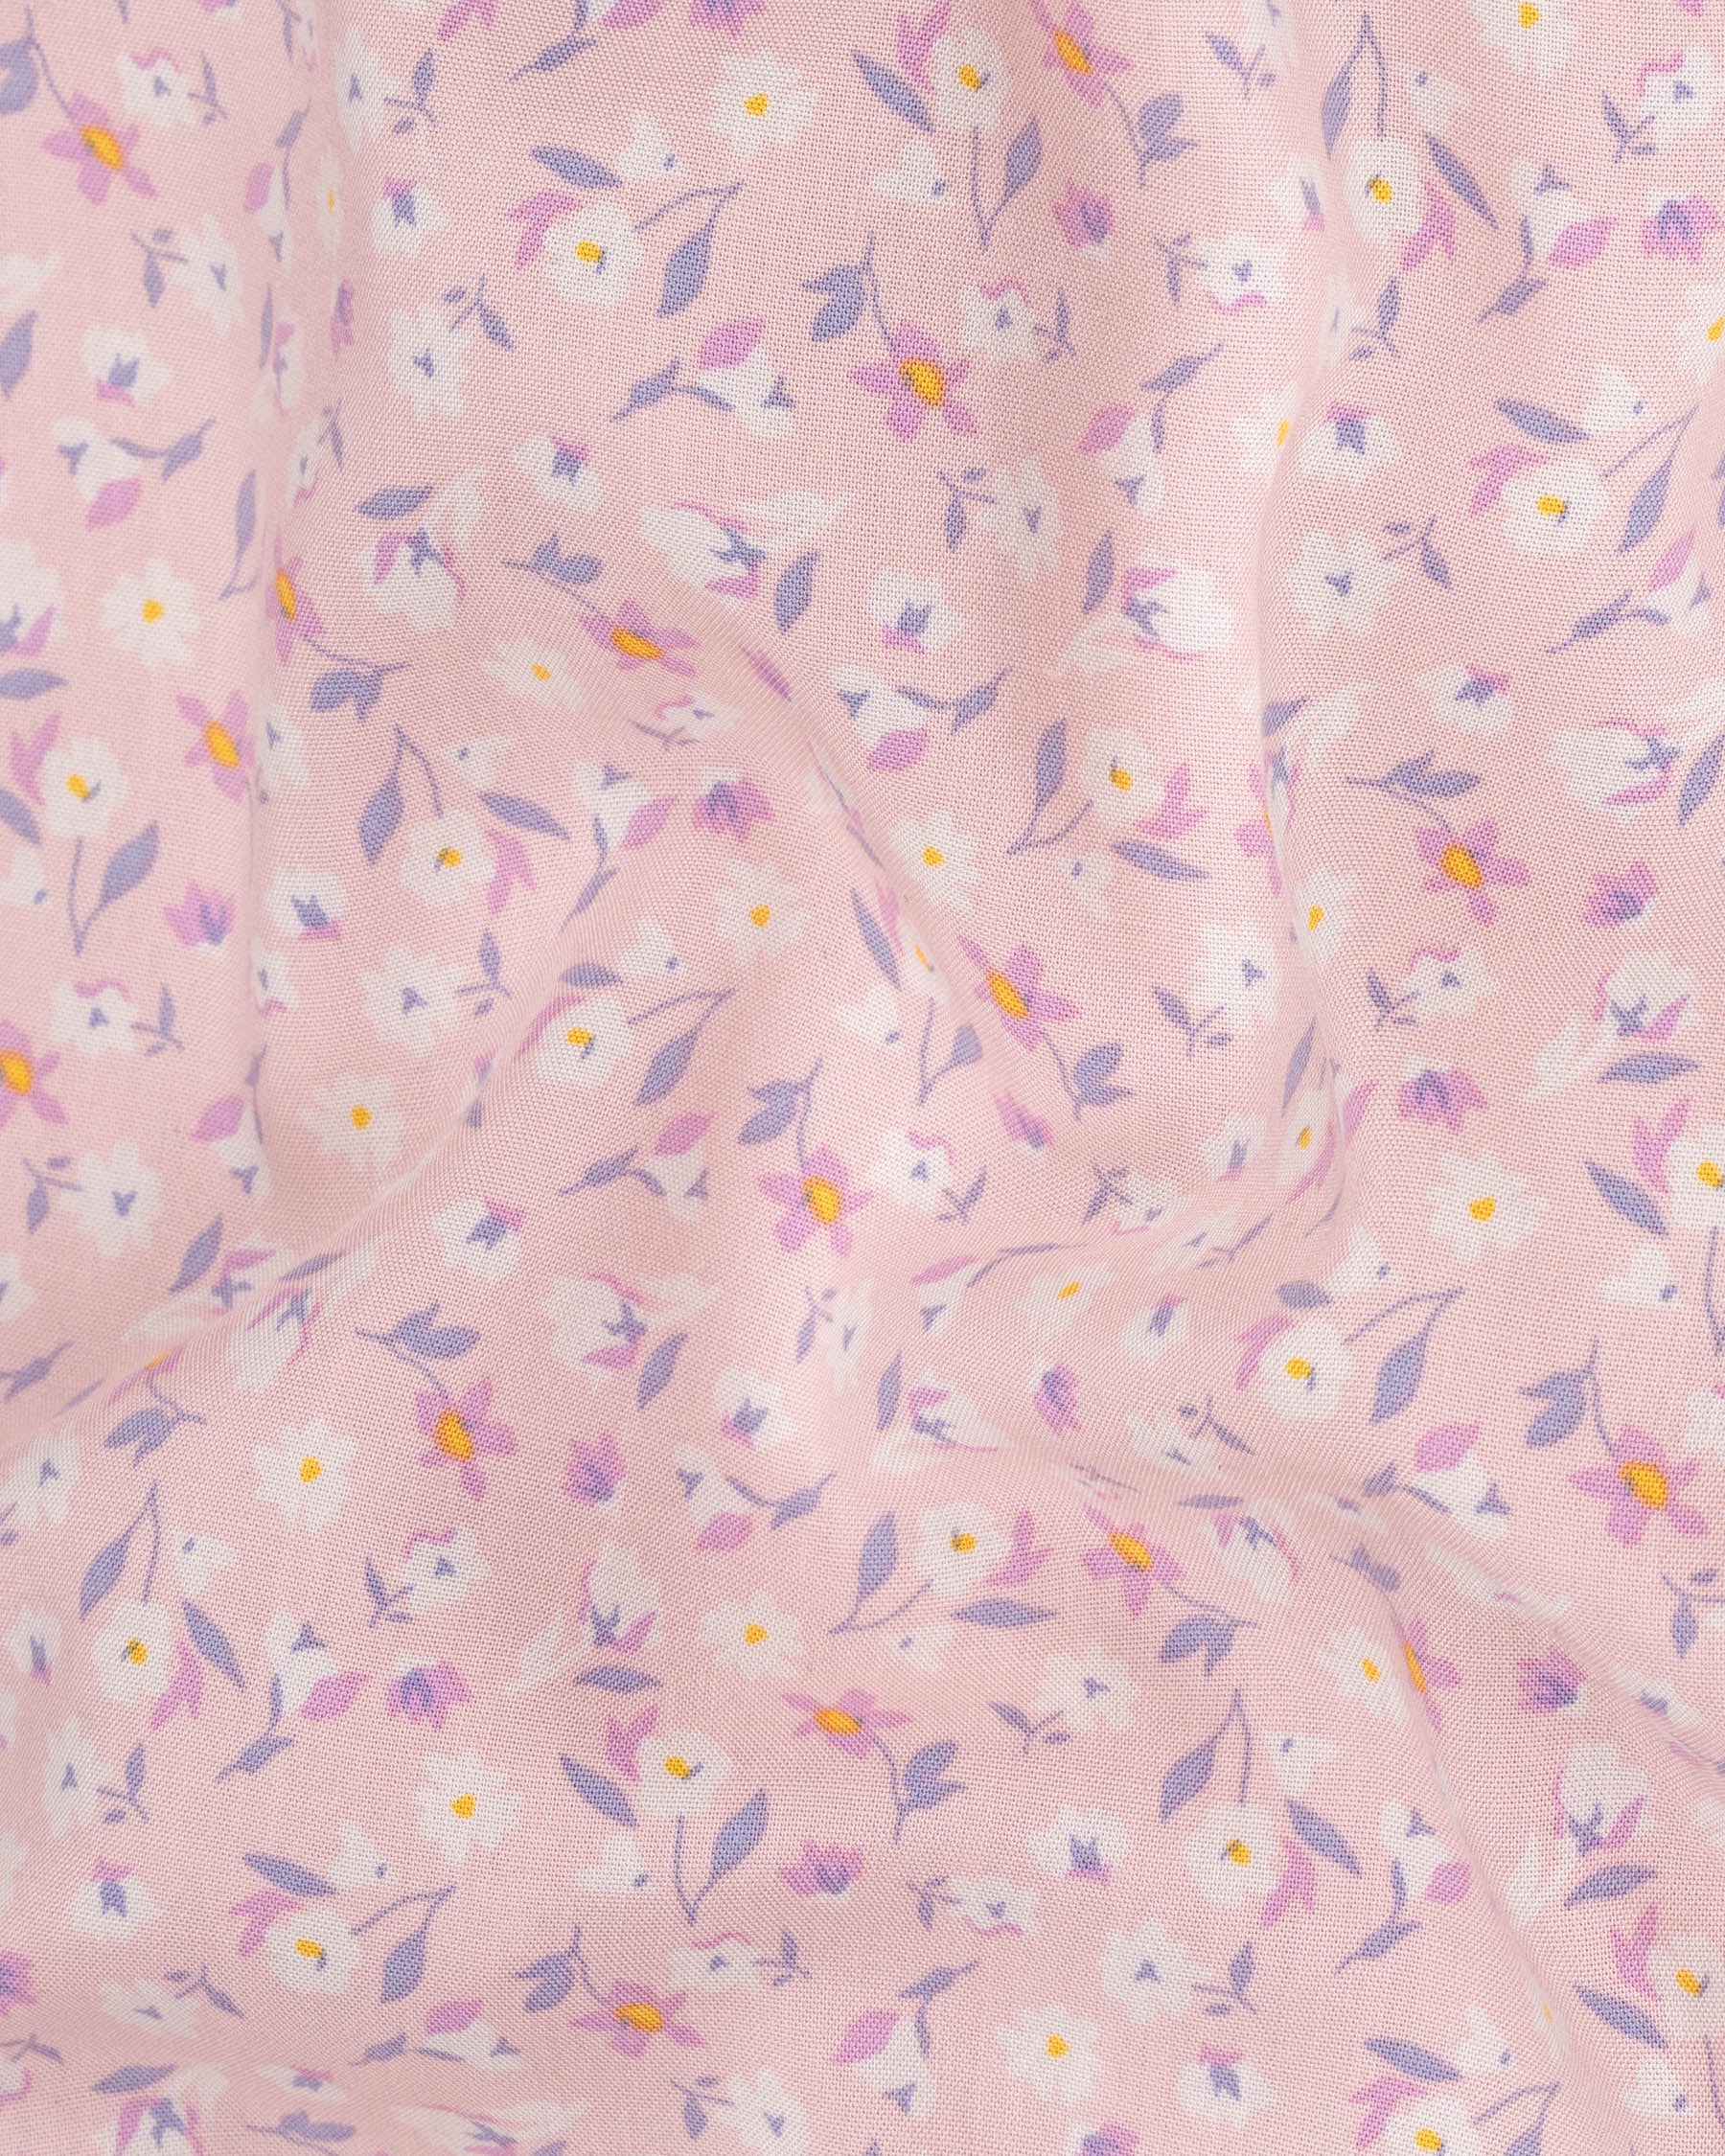 Oyster Pink Floral Printed Premium Tencel Shorts SR121-28, SR121-30, SR121-32, SR121-34, SR121-36, SR121-38, SR121-40, SR121-42, SR121-44